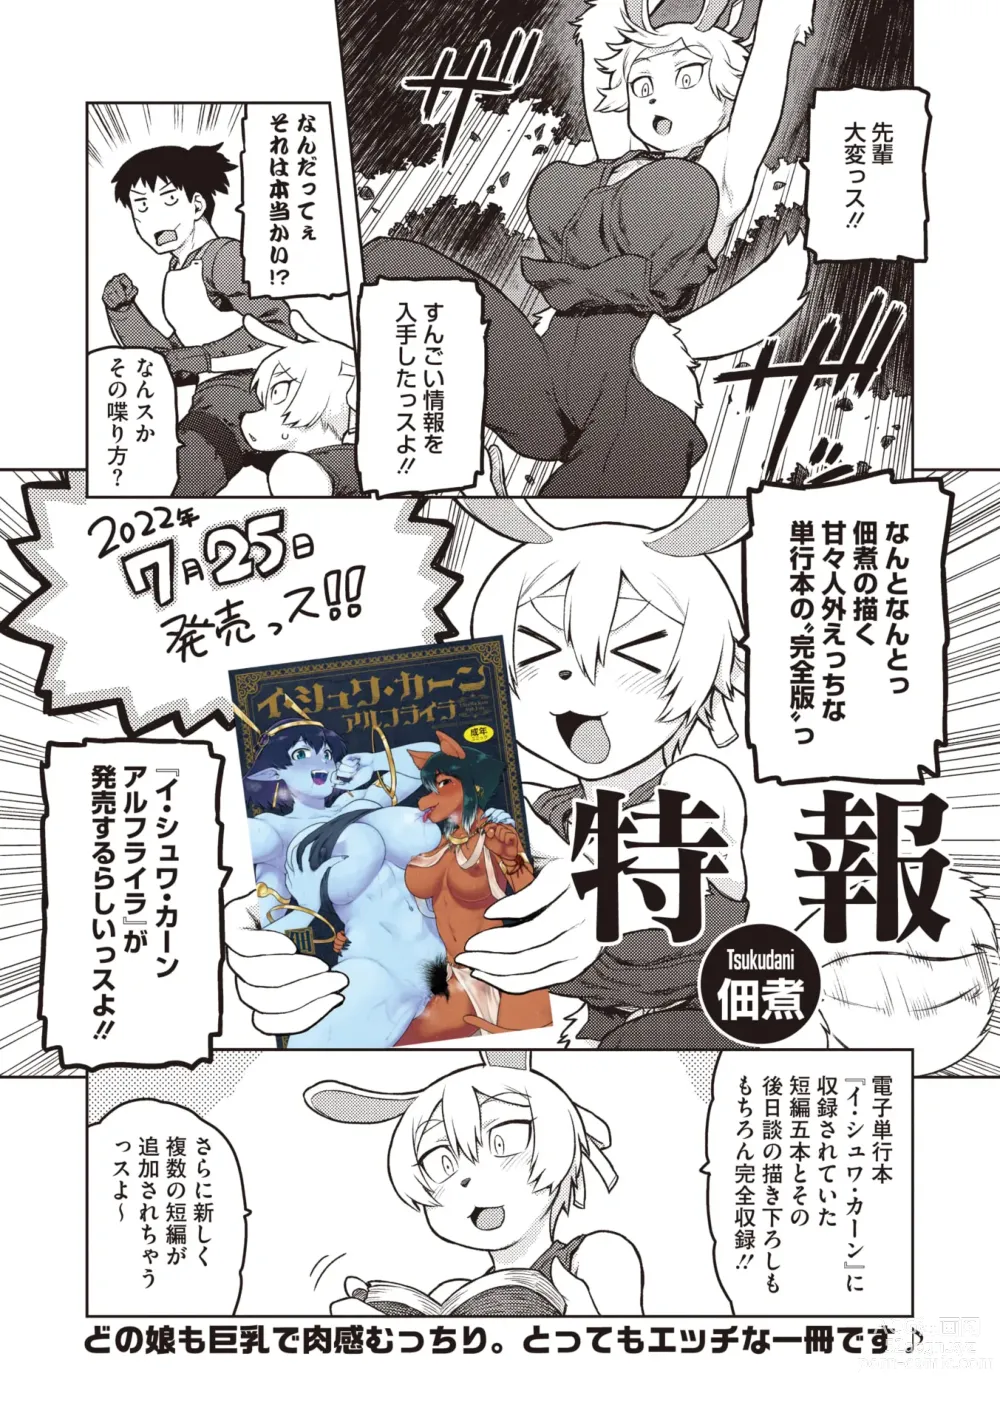 Page 144 of manga COMIC GAIRA Vol. 10